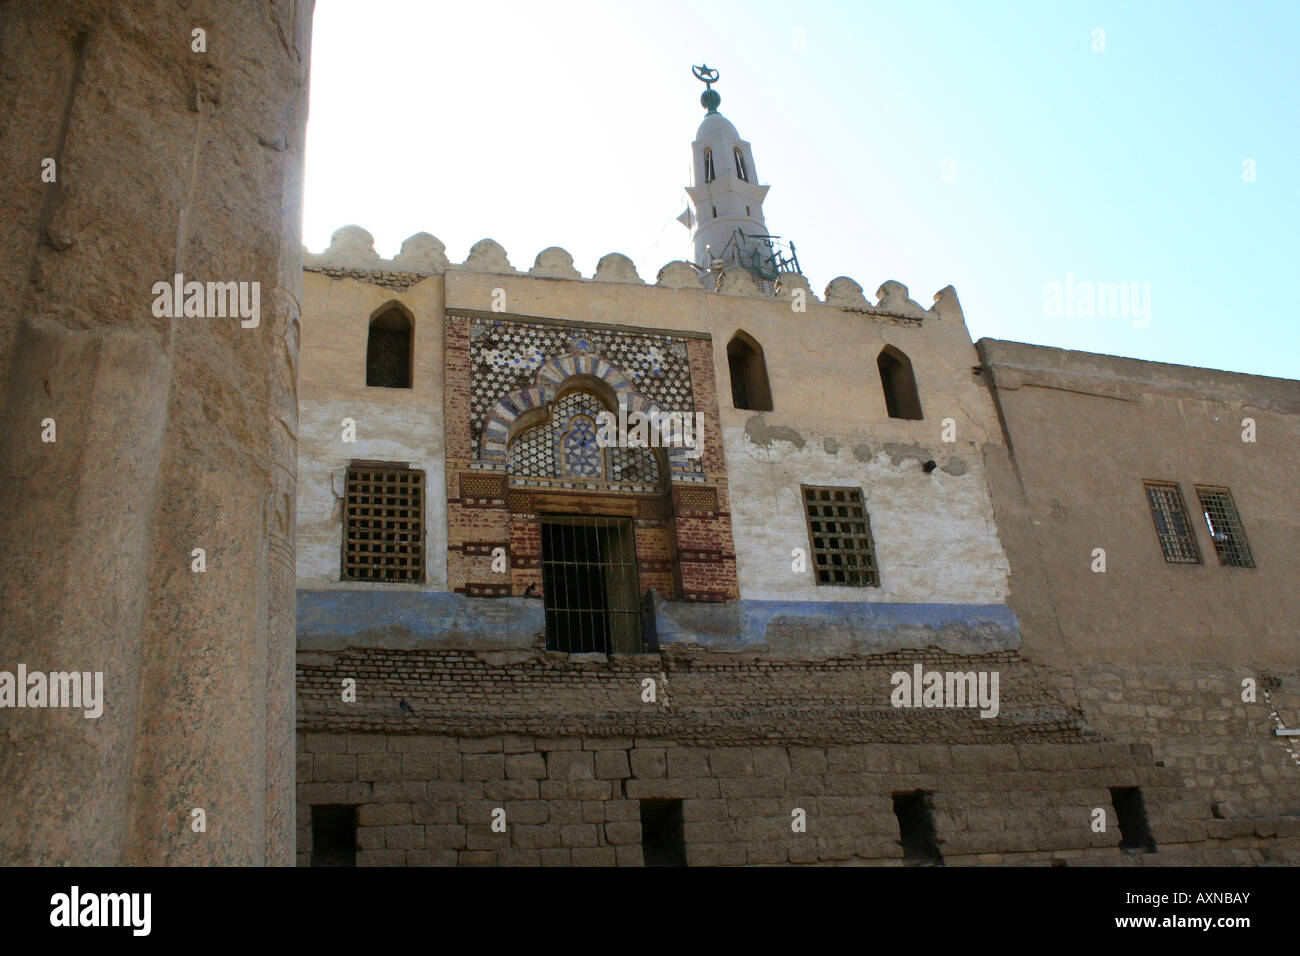 Luxor Temple - Islamic Mosque of Abu Haggag [Luxor, Egypt, Arab States, Africa]                                                . Stock Photo